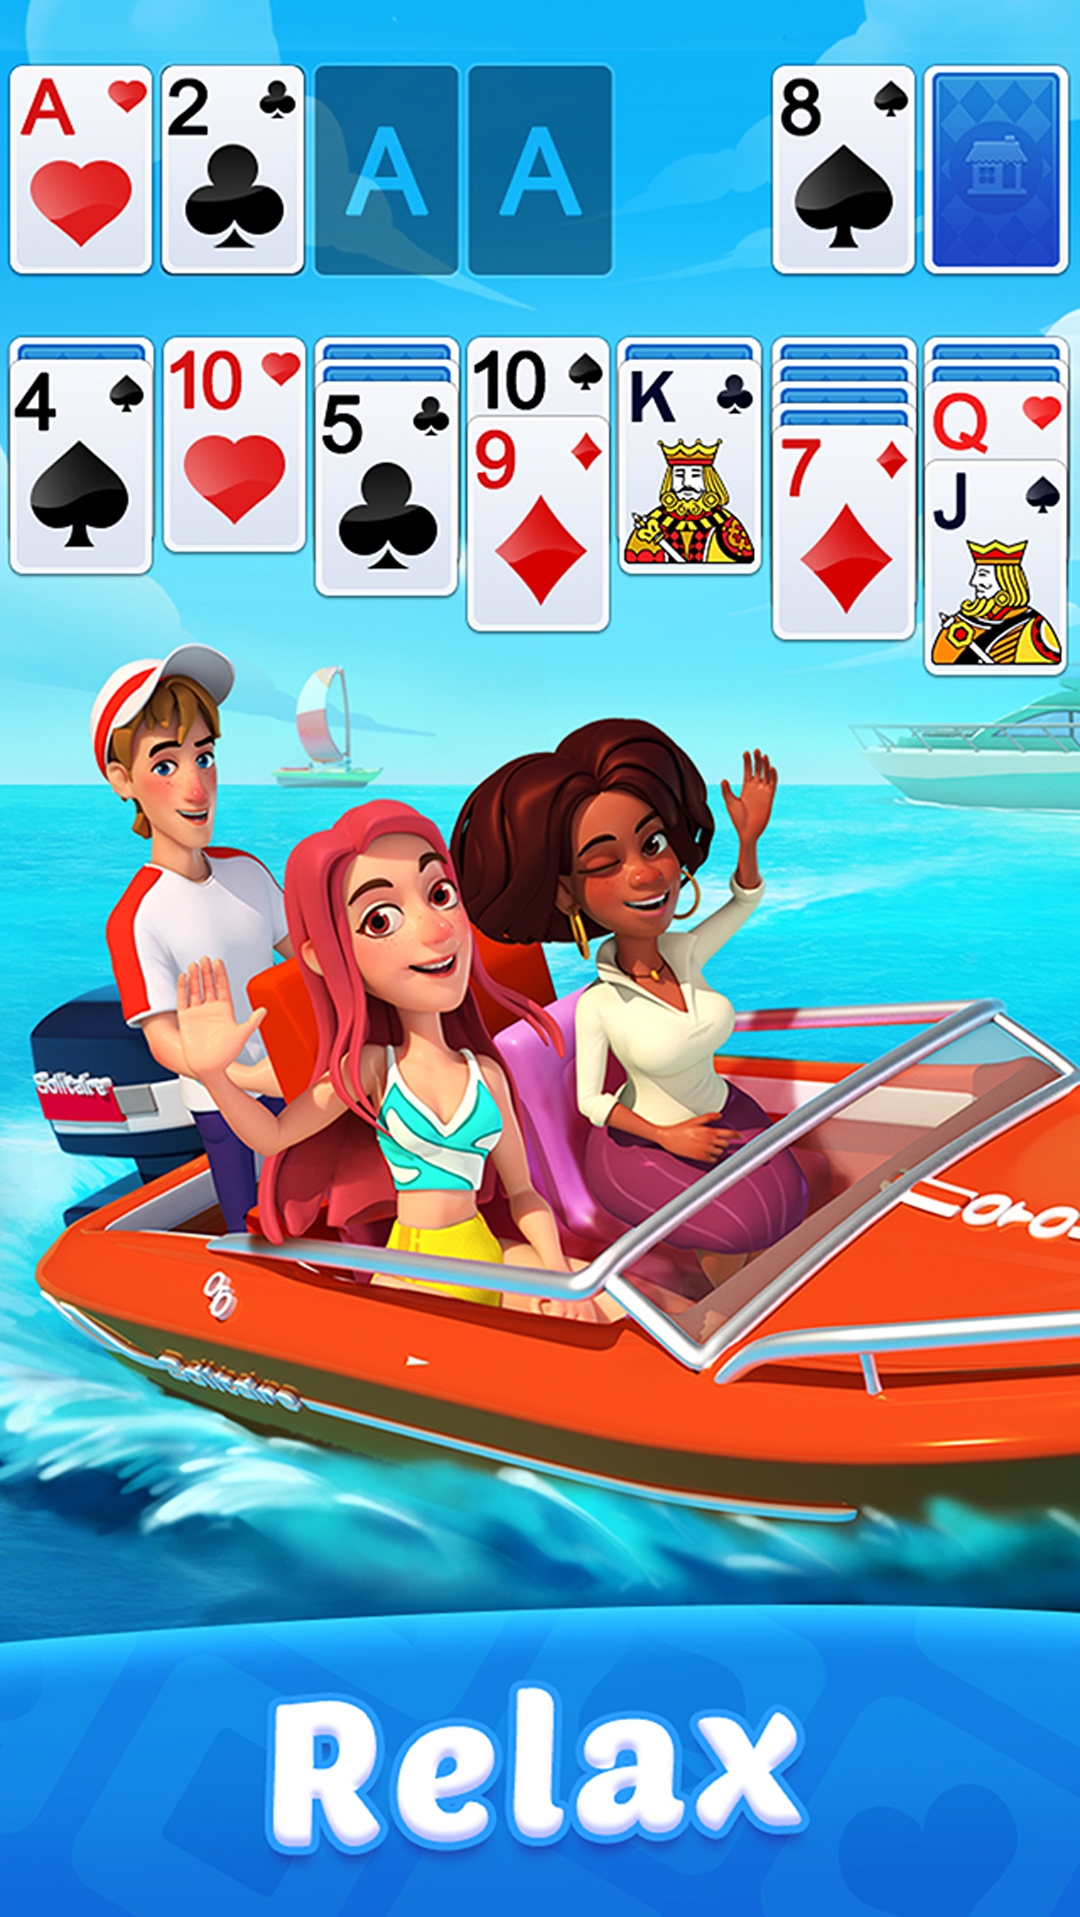 Download Solitaire: Card Games für Android kostenlos.